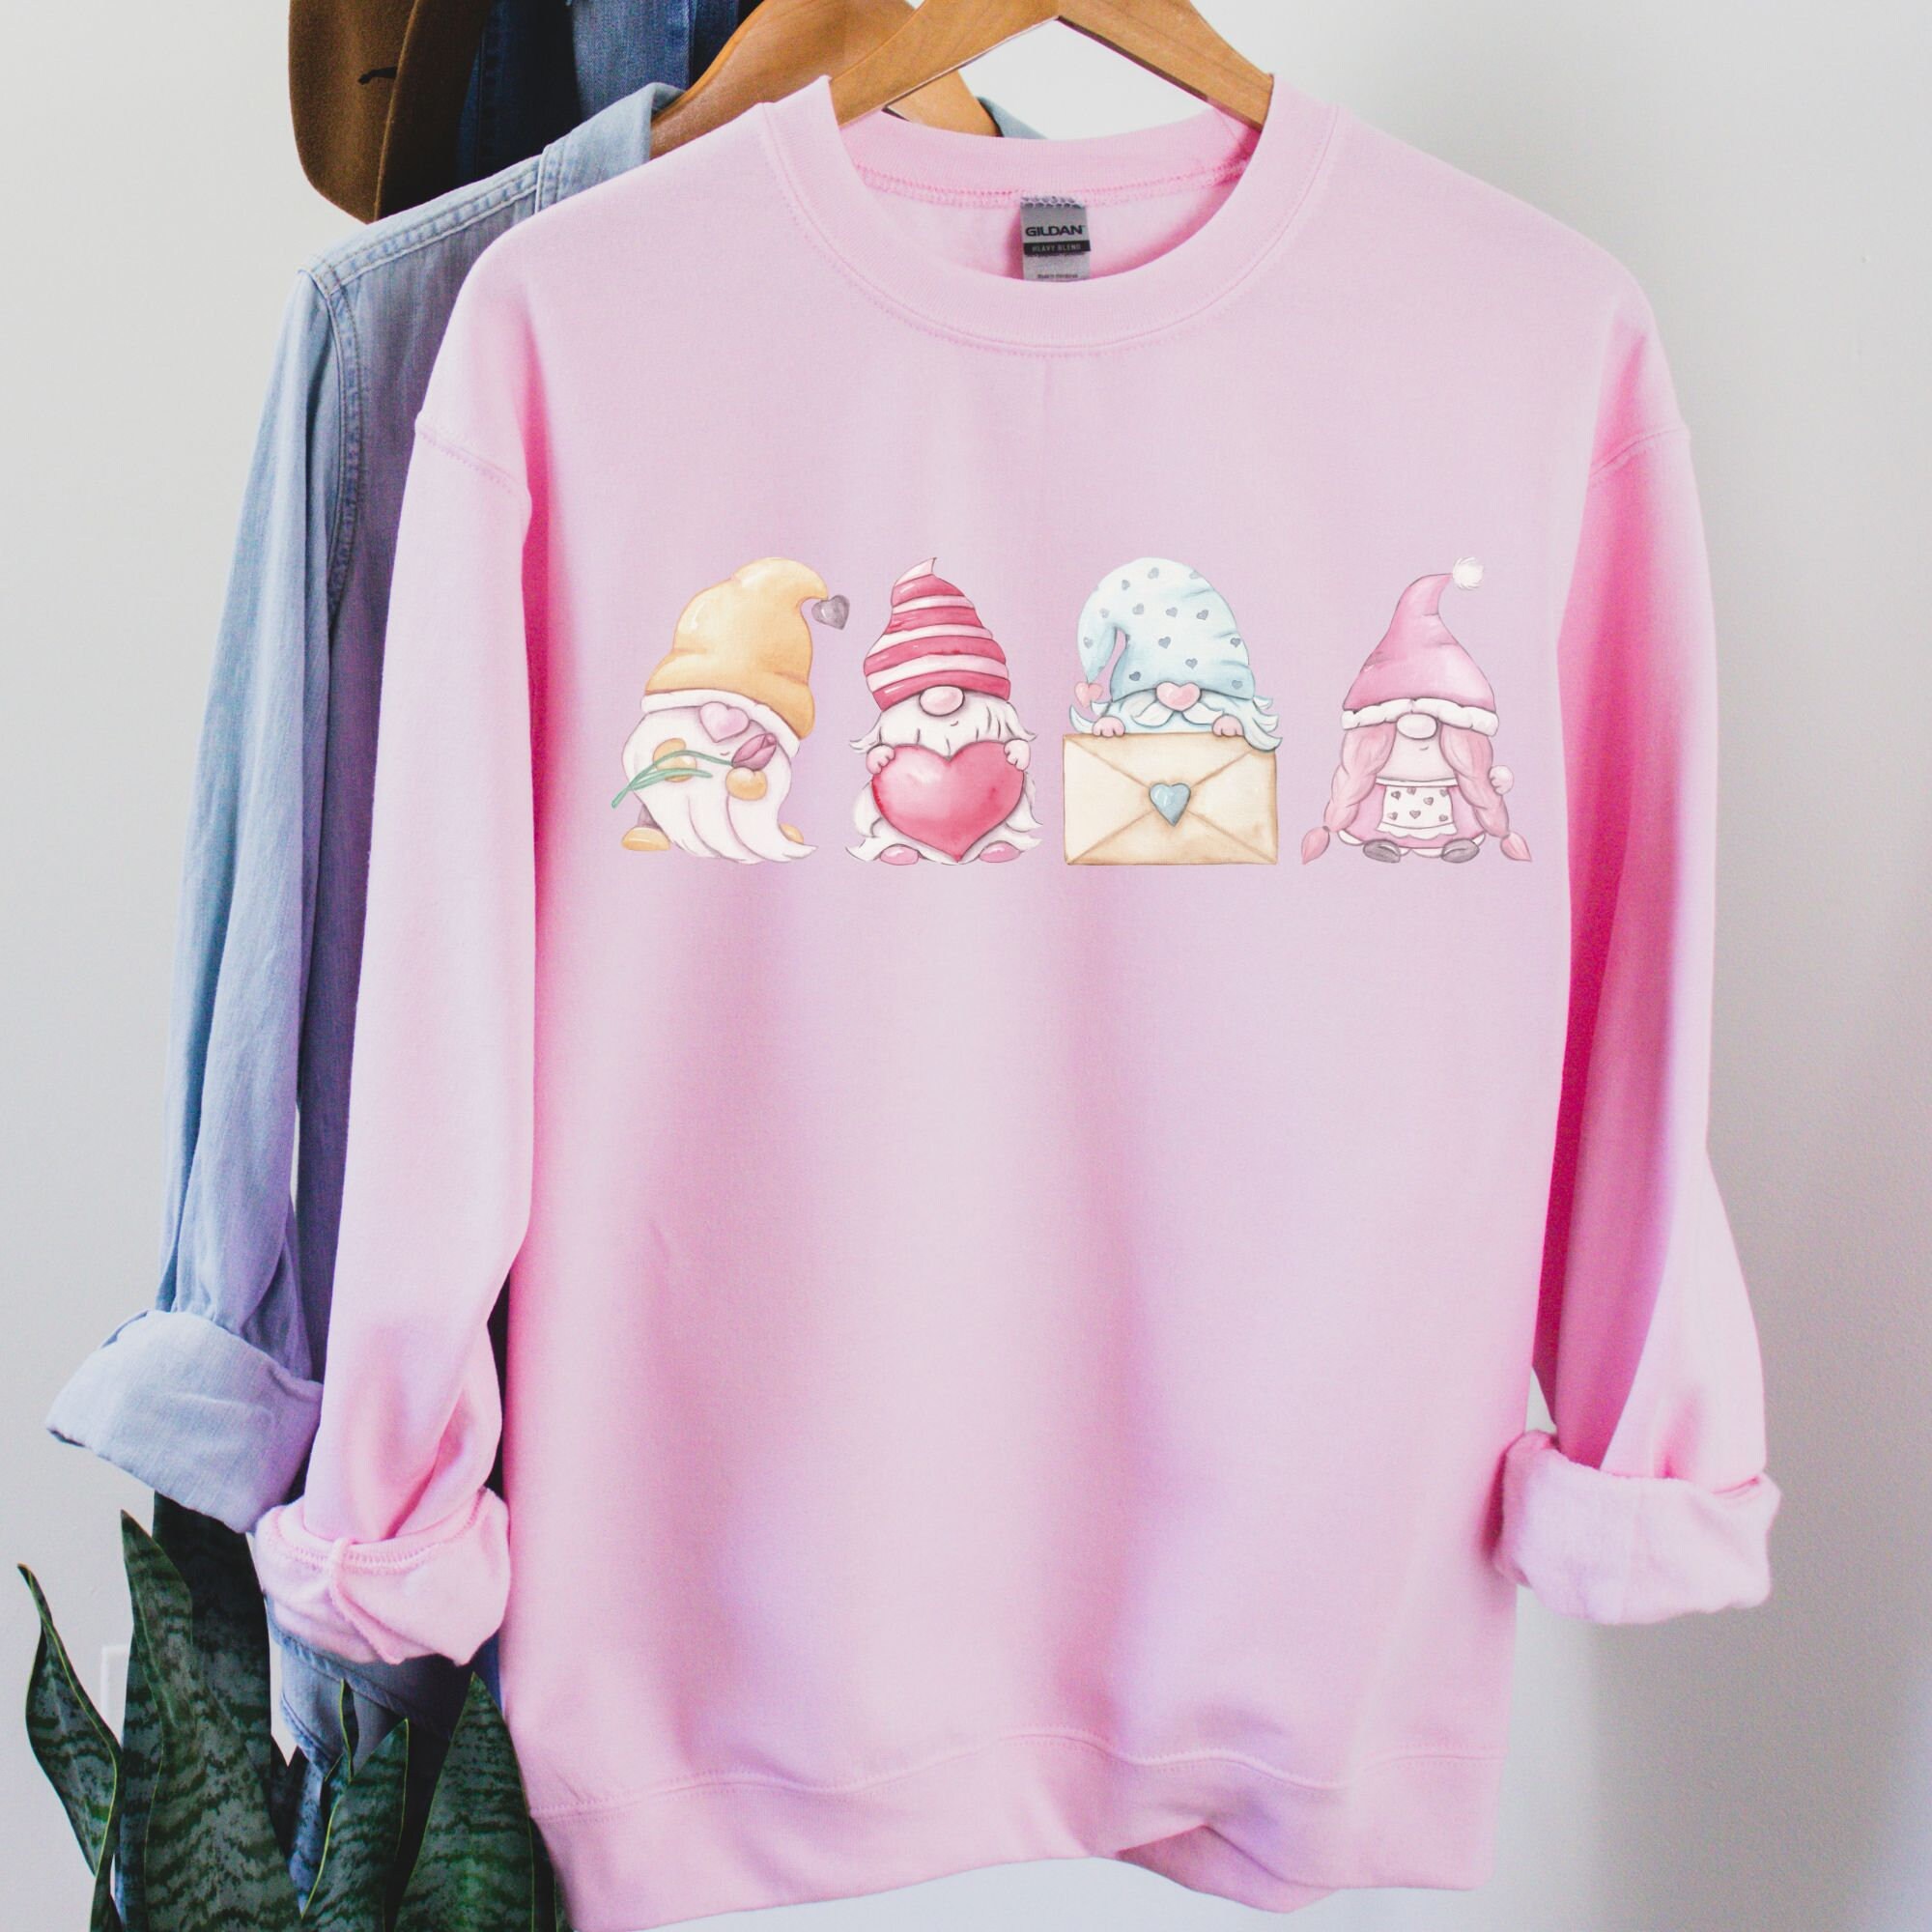 Discover Love Gnome Valentines Sweatshirt, Gnome heart Sweatshirt